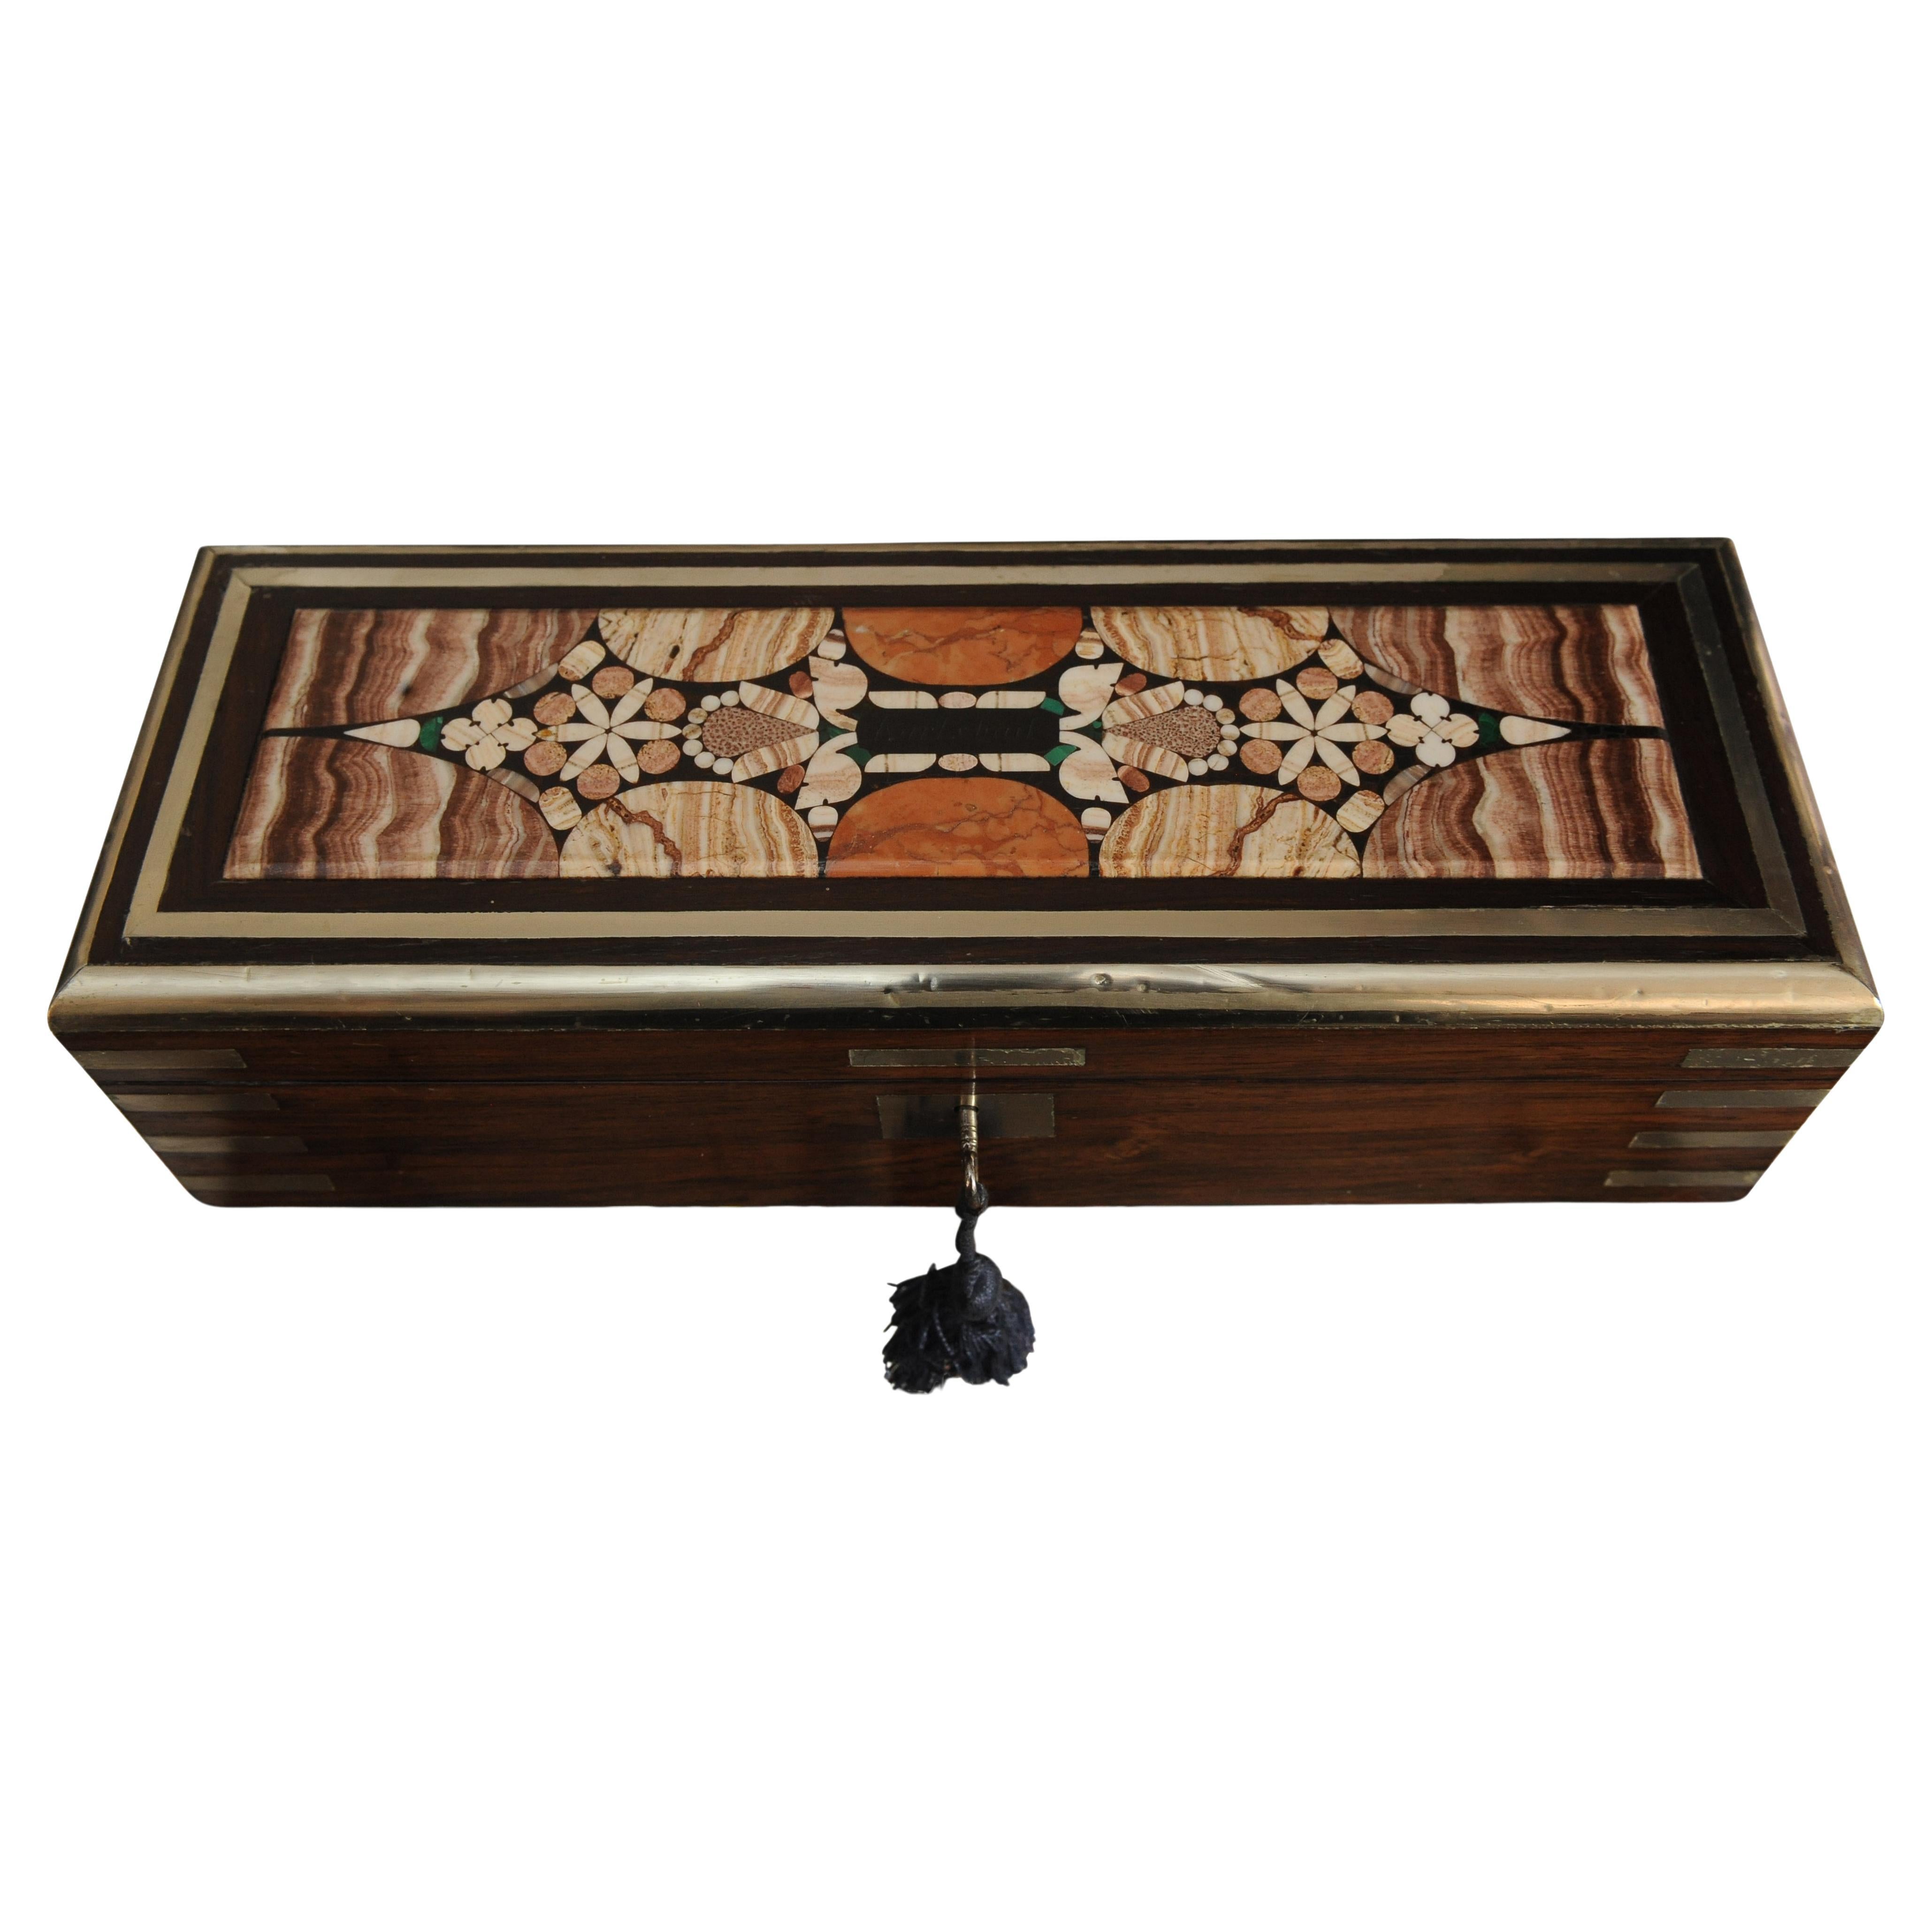  An Exquisite Victorian Pietra Dura Grand Tour Campaign Collectors Box 1800's For Sale